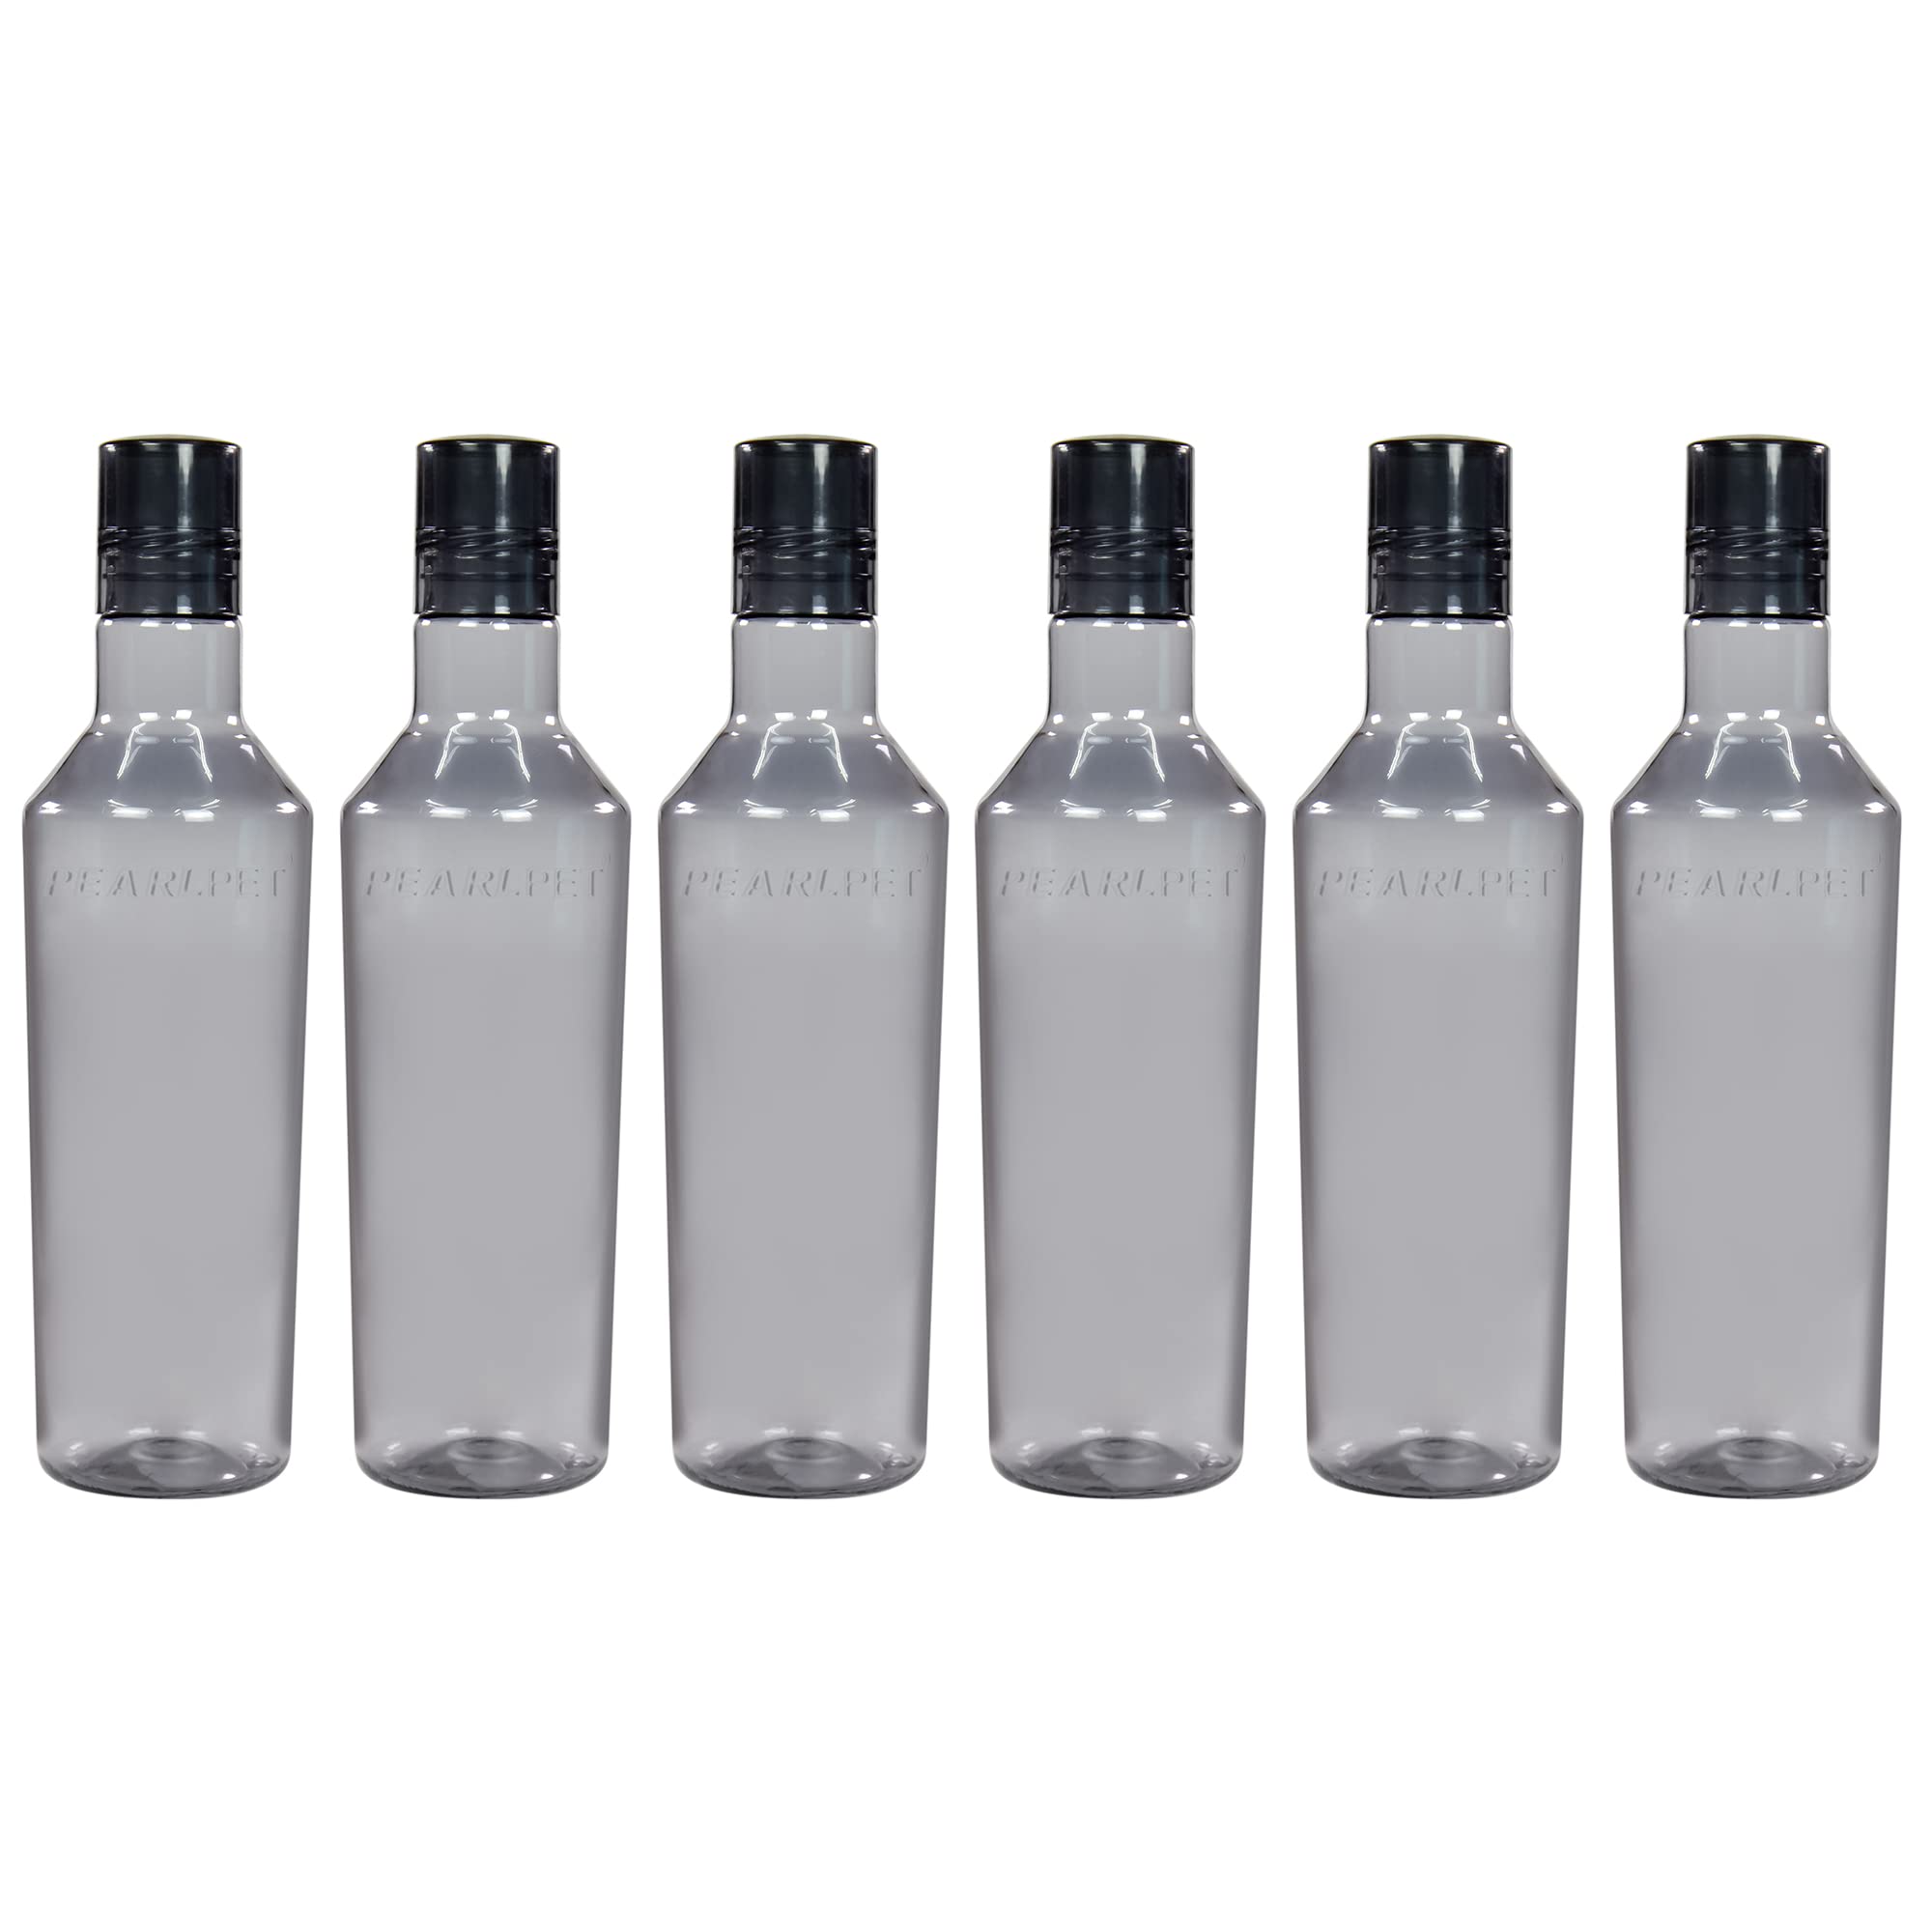 PEARLPET Nile BPA-free Plastic Water Bottle Set of 6 Pcs, Each 1000ml, Purple